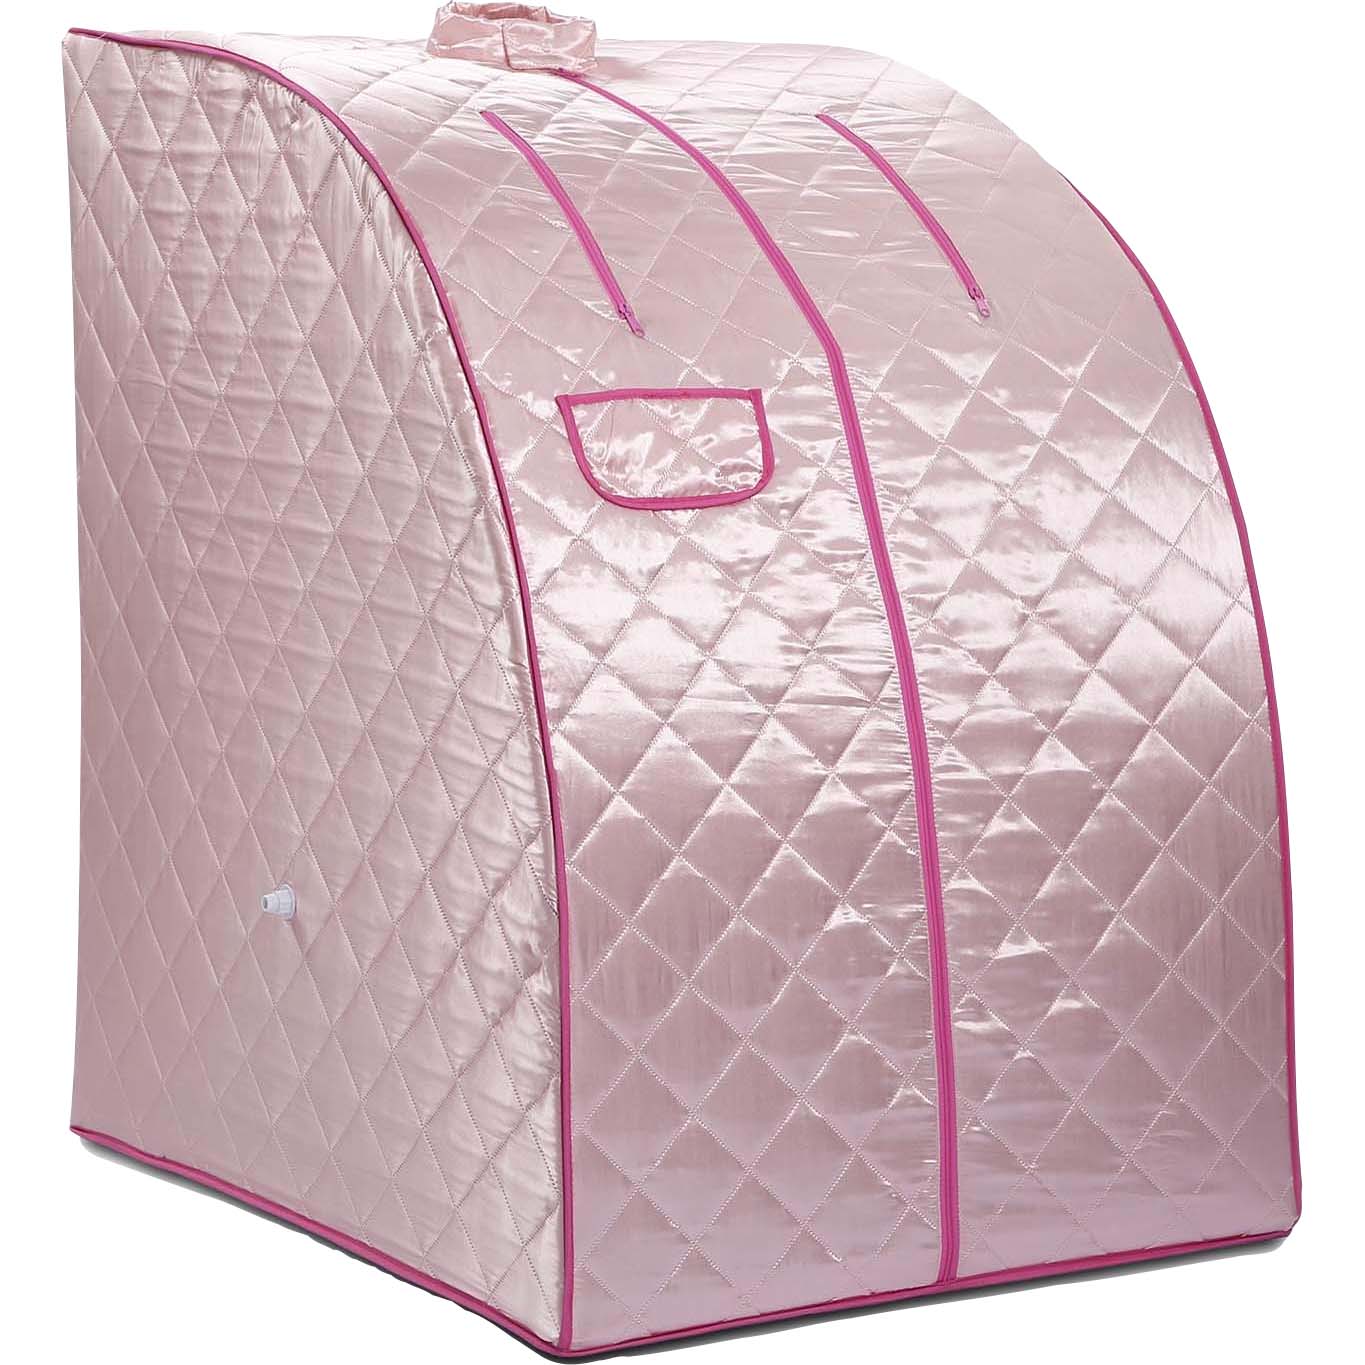 Laperva Portable Steam Sauna Room, Pink